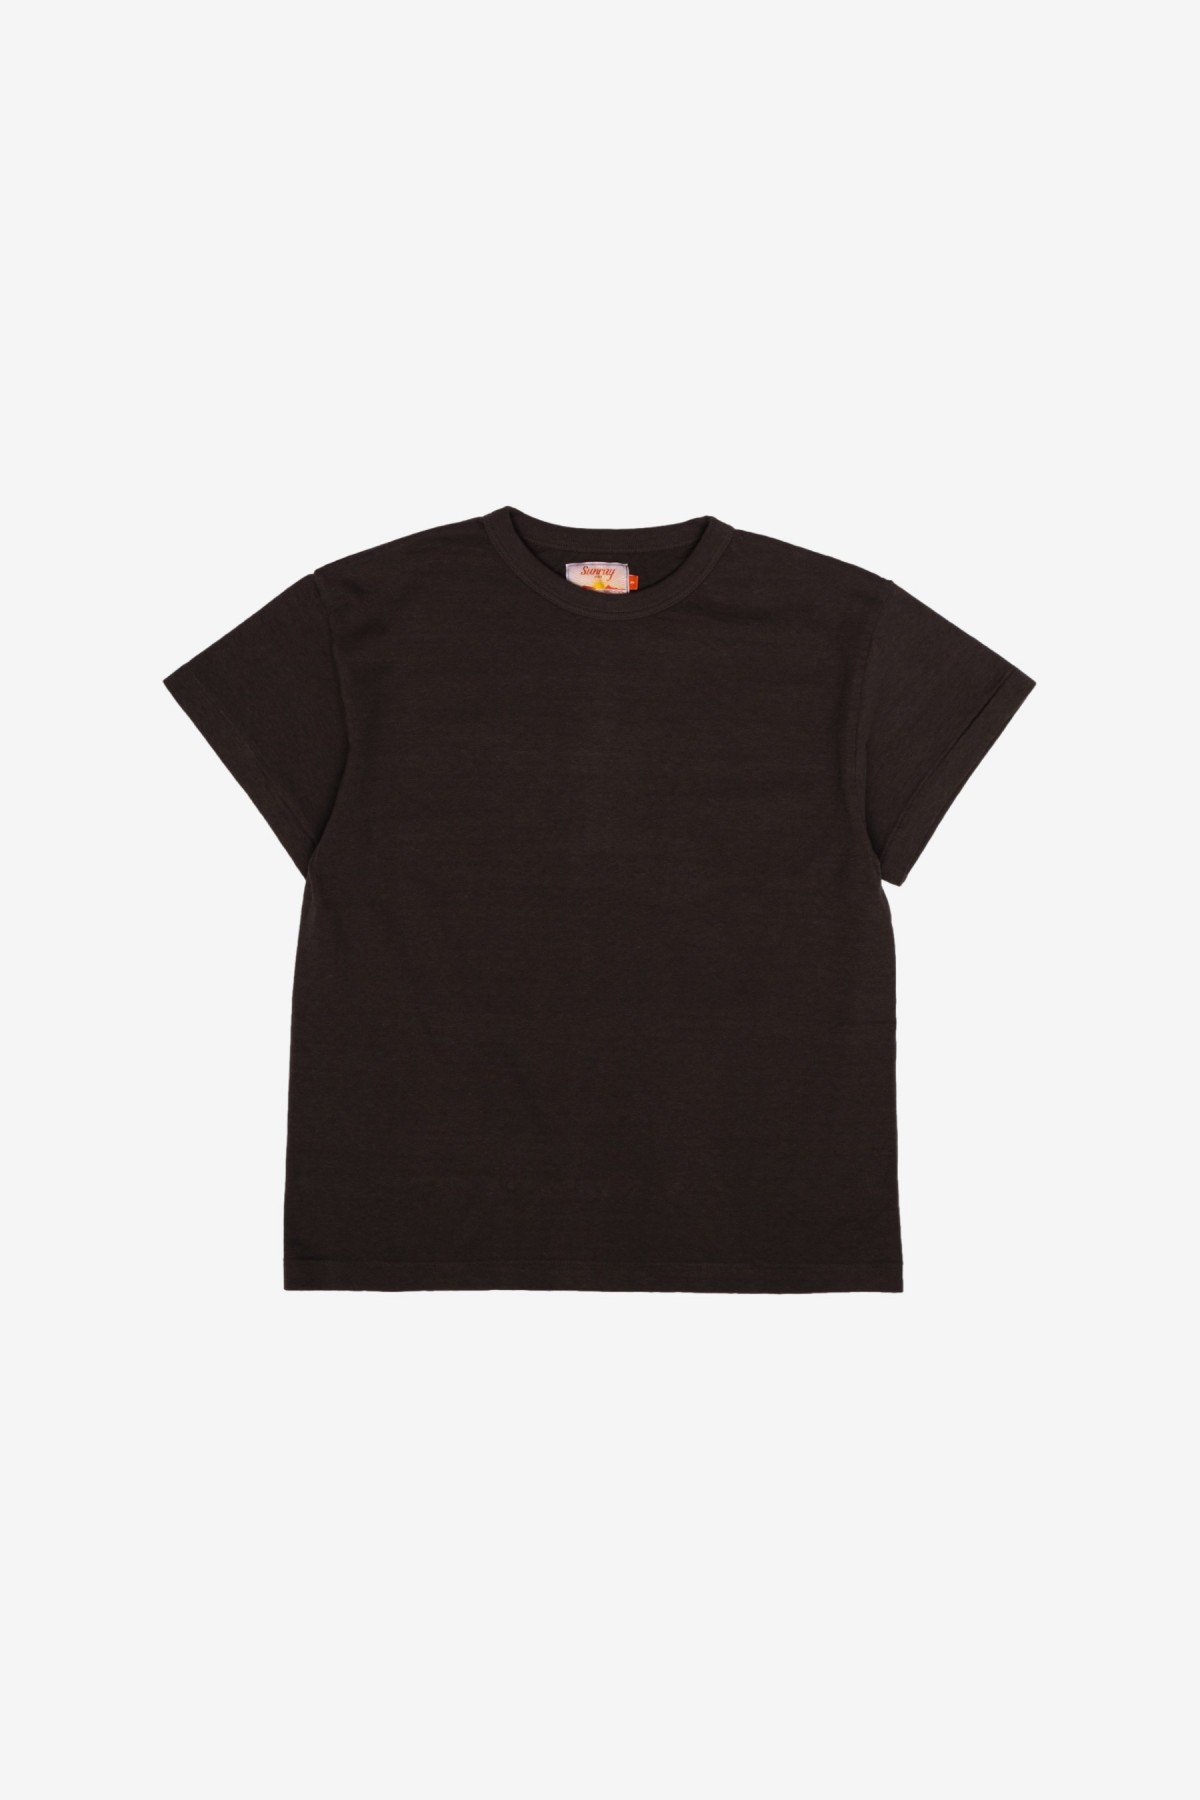 Sunray Sportswear Na'Maka'Oh Short Sleeve T-Shirt in Kokoshuko Black